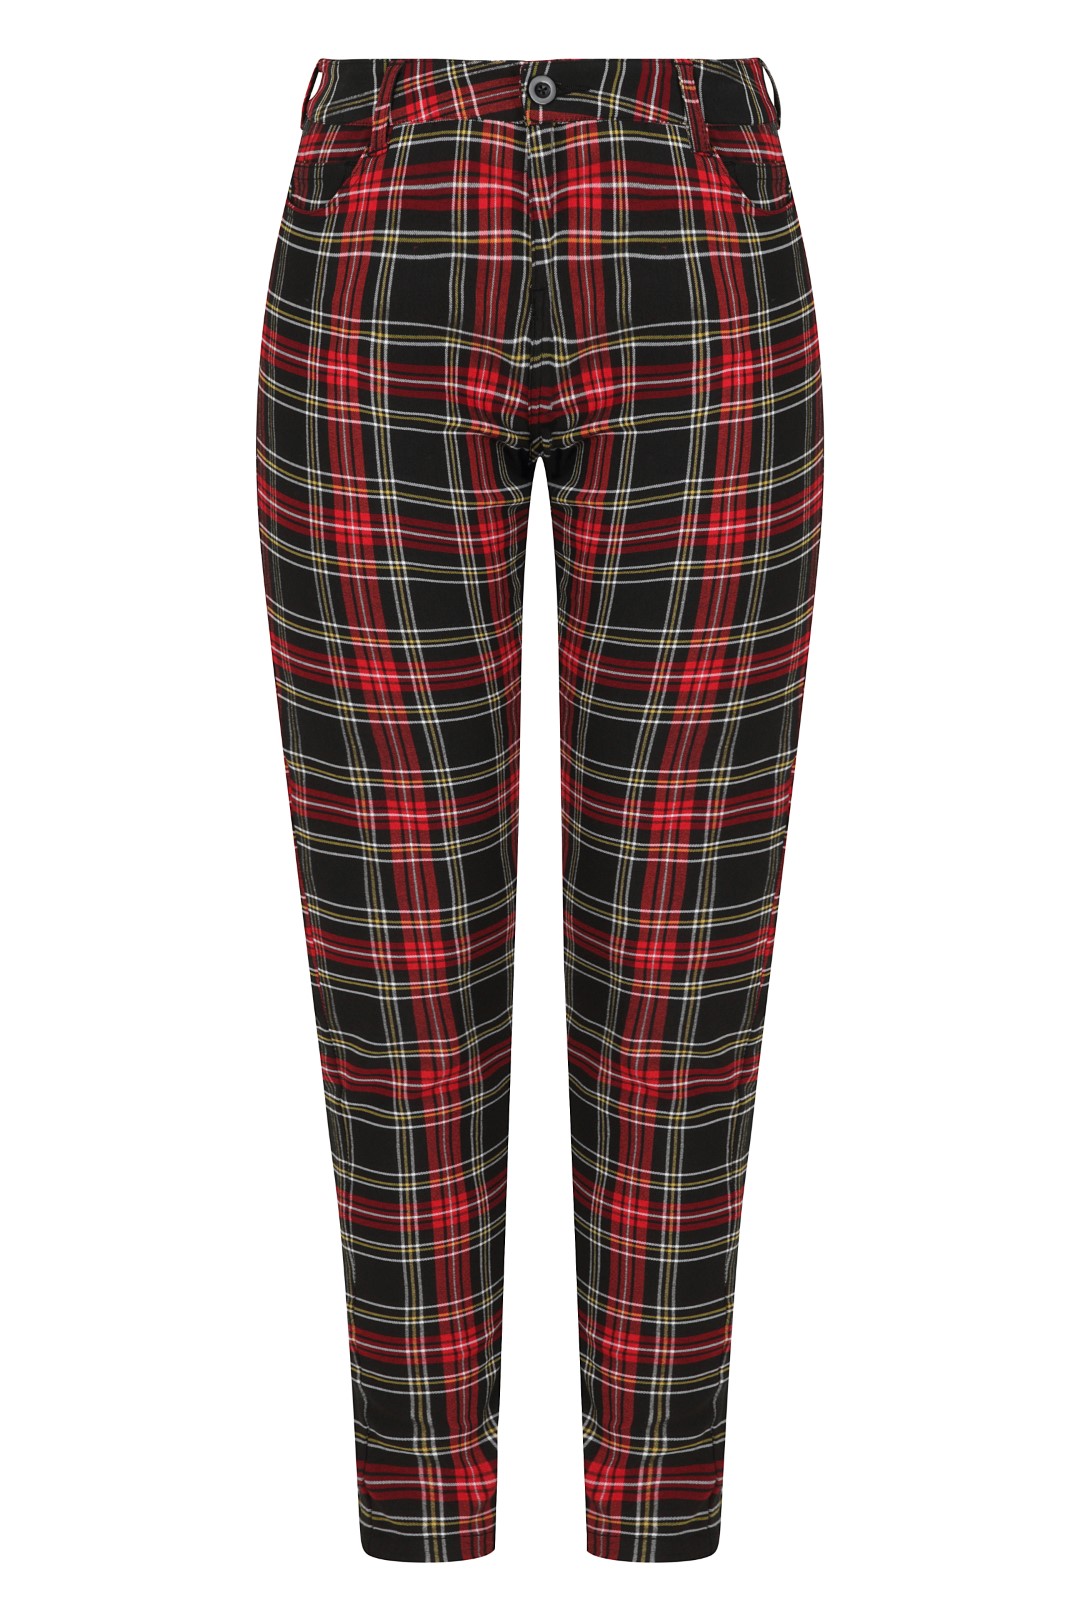 Checkered skinny pants